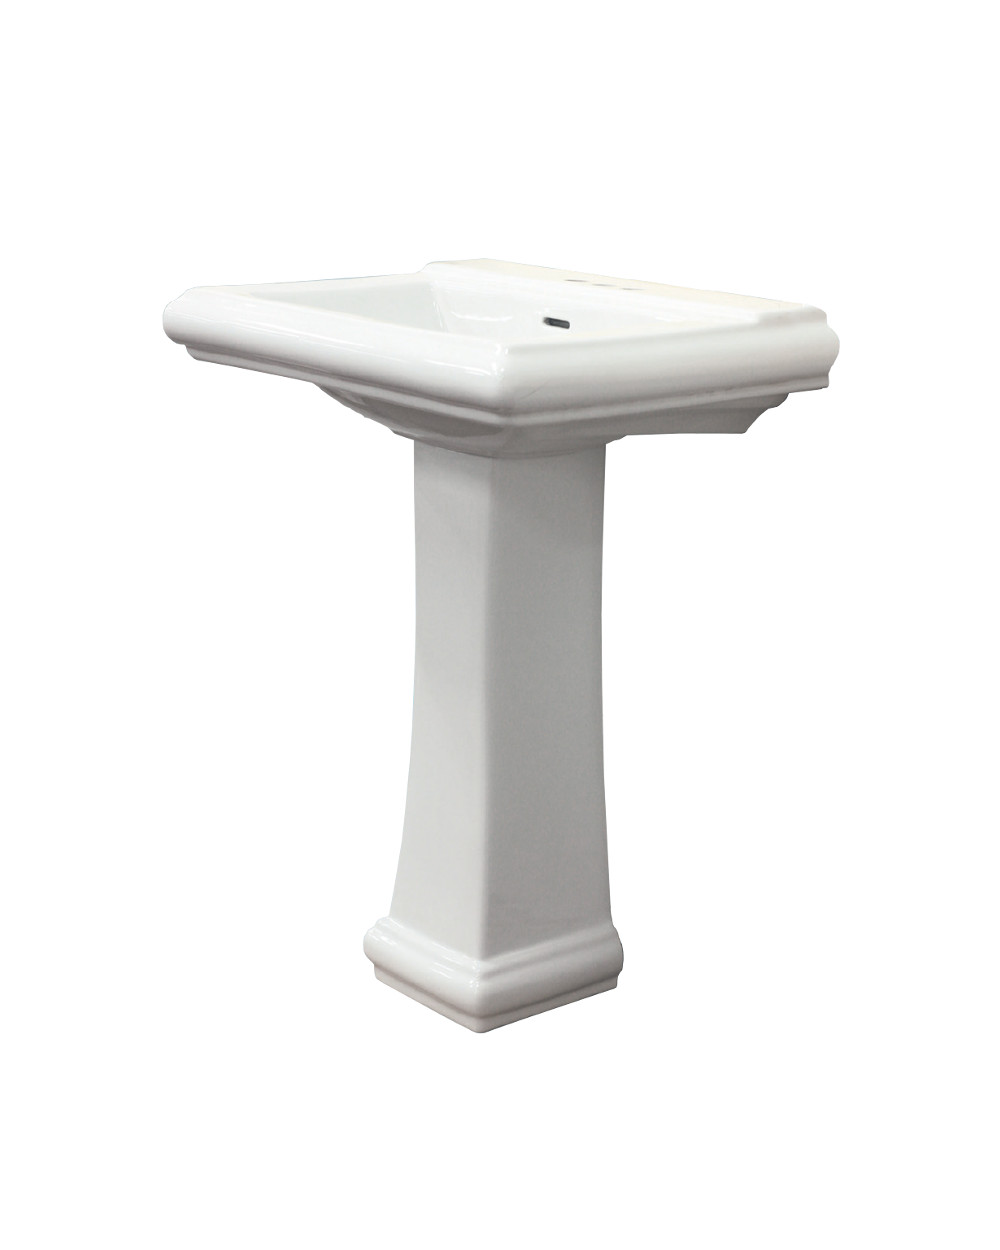 Avalon 26-3/8x19-5/8 Single Bowl Pedestal Sink in White